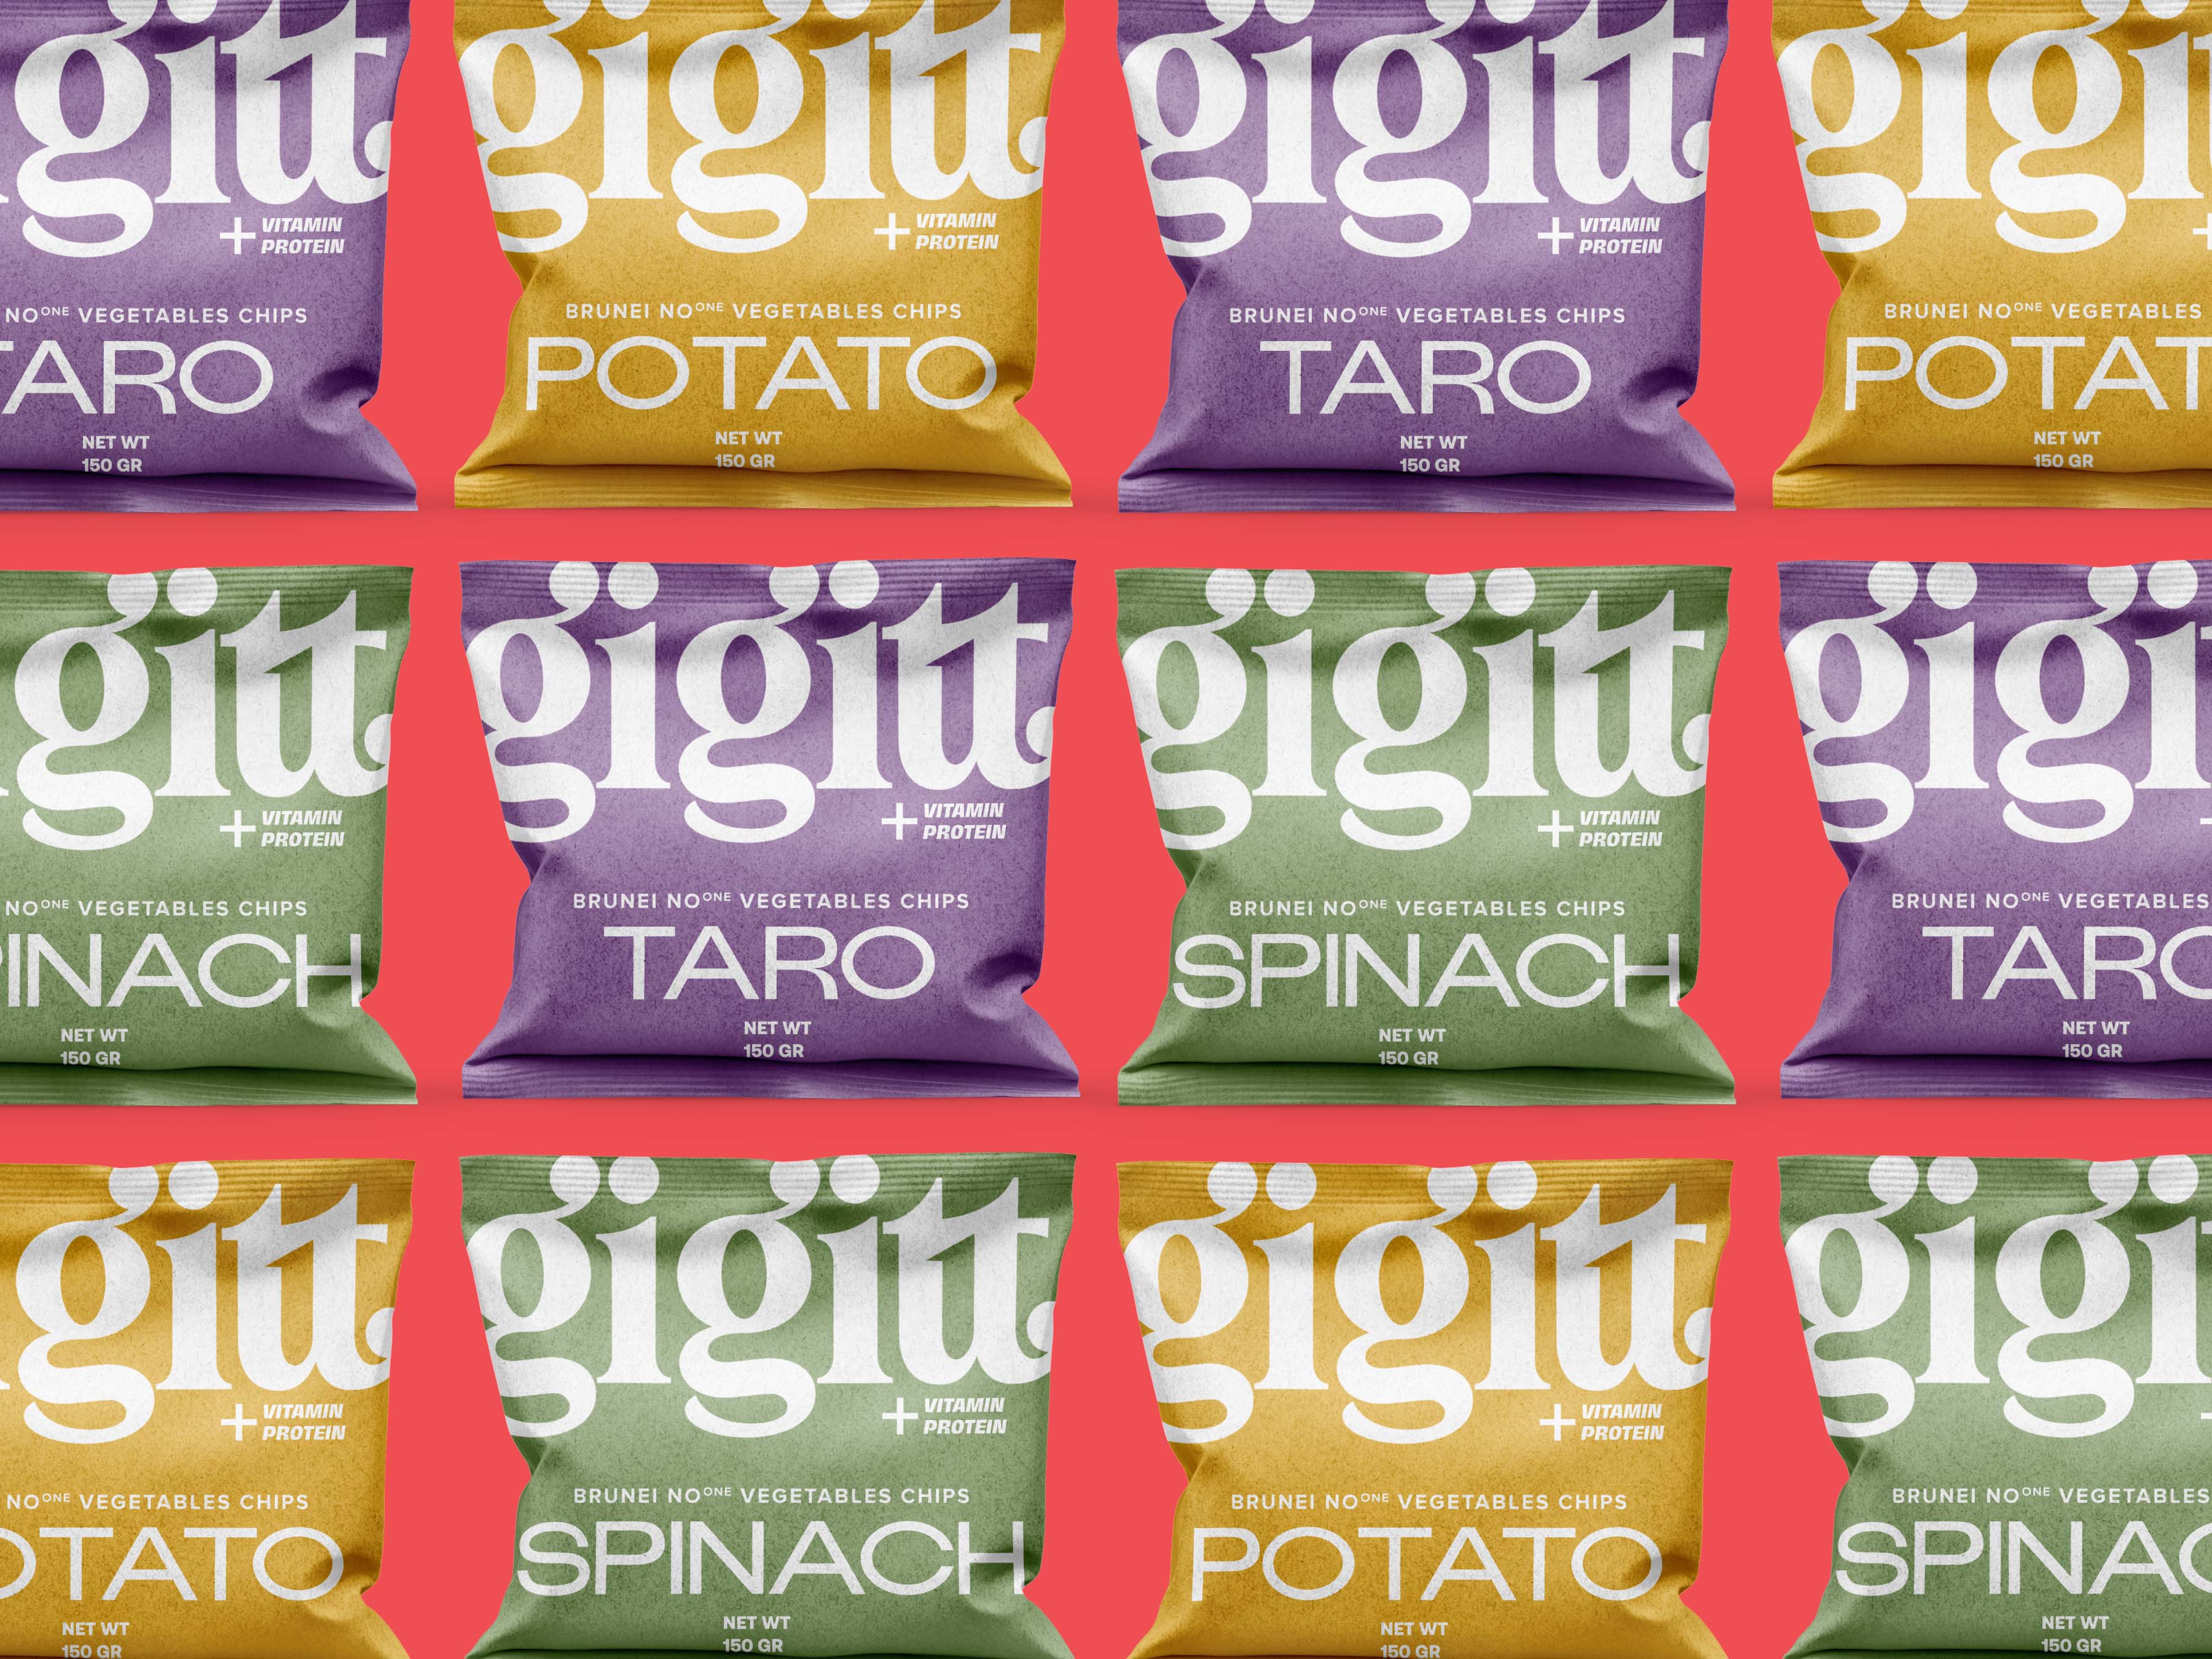 Widarto Impact designing logo system and packaging design for GIGITT vegetables snack